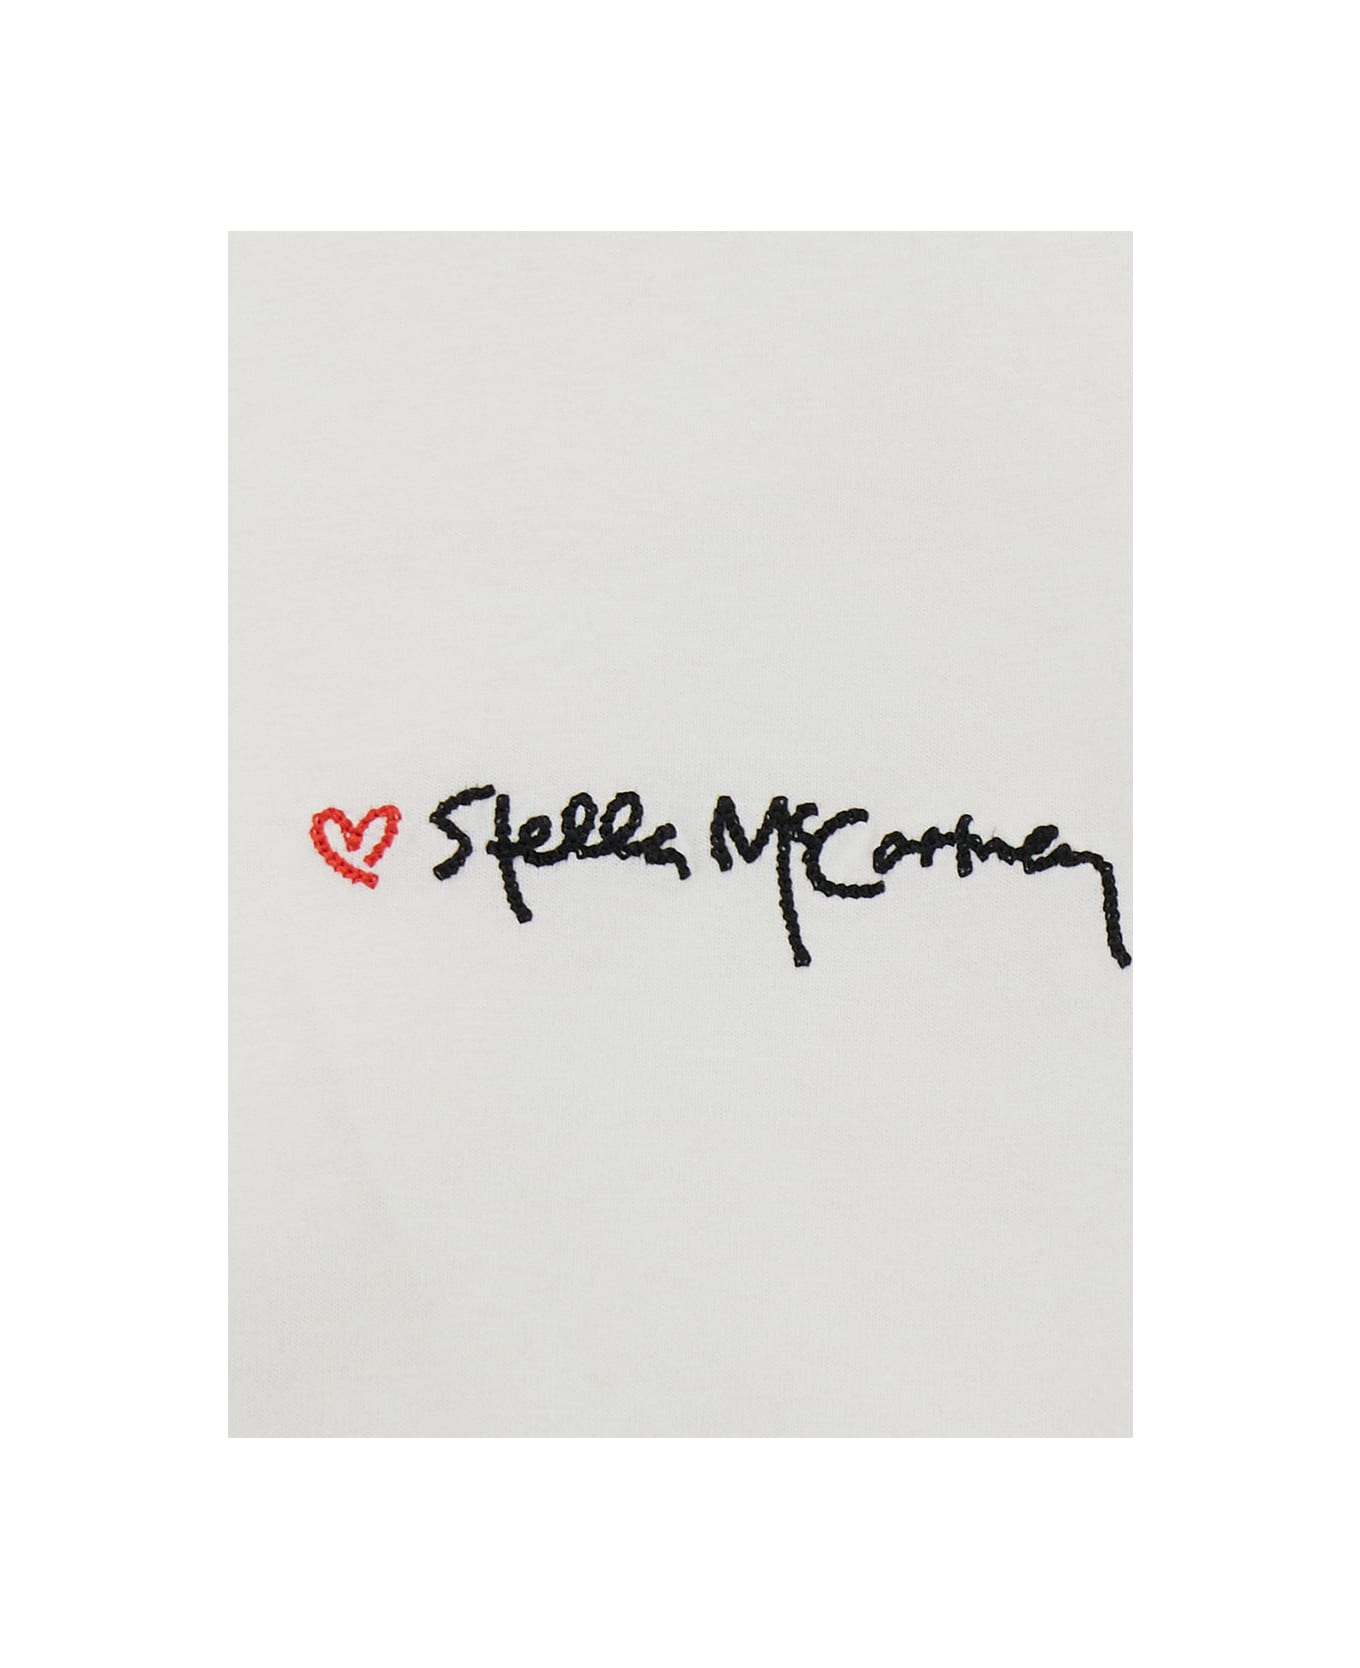 Stella McCartney Embroidered T-shirt - White